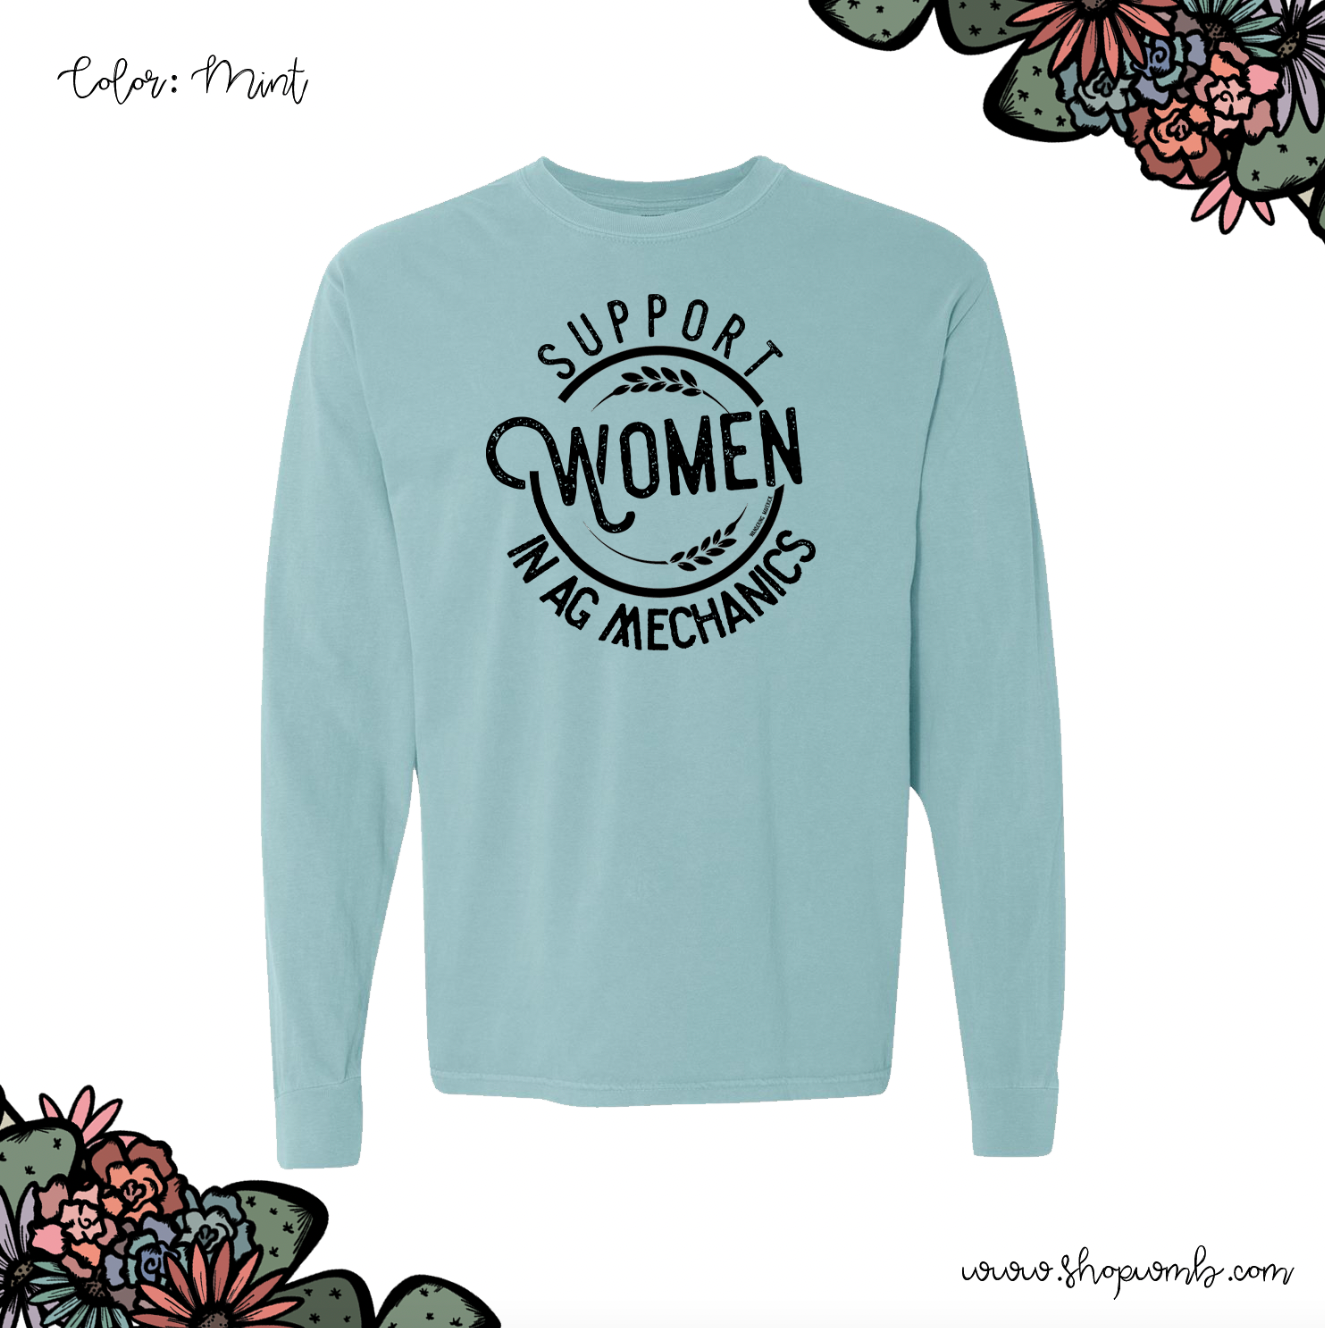 Support Women In Ag Mechanics LONG SLEEVE T-Shirt (S-3XL) - Multiple Colors!